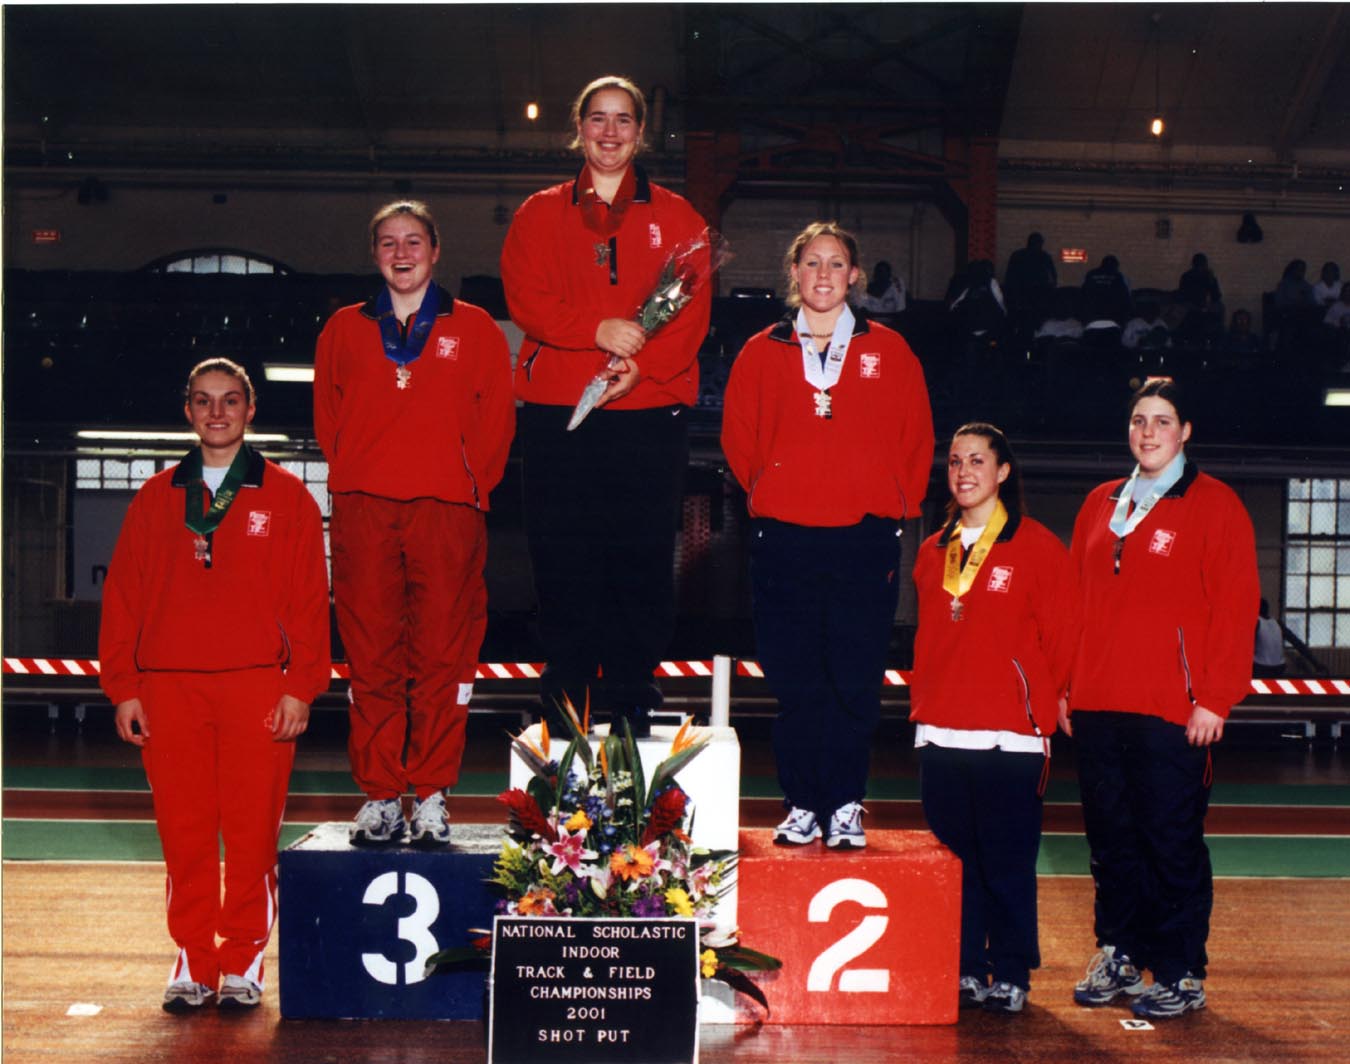 Karen Freberg on the Winner's Stand at 2001 National Scholastic Indoor Championships